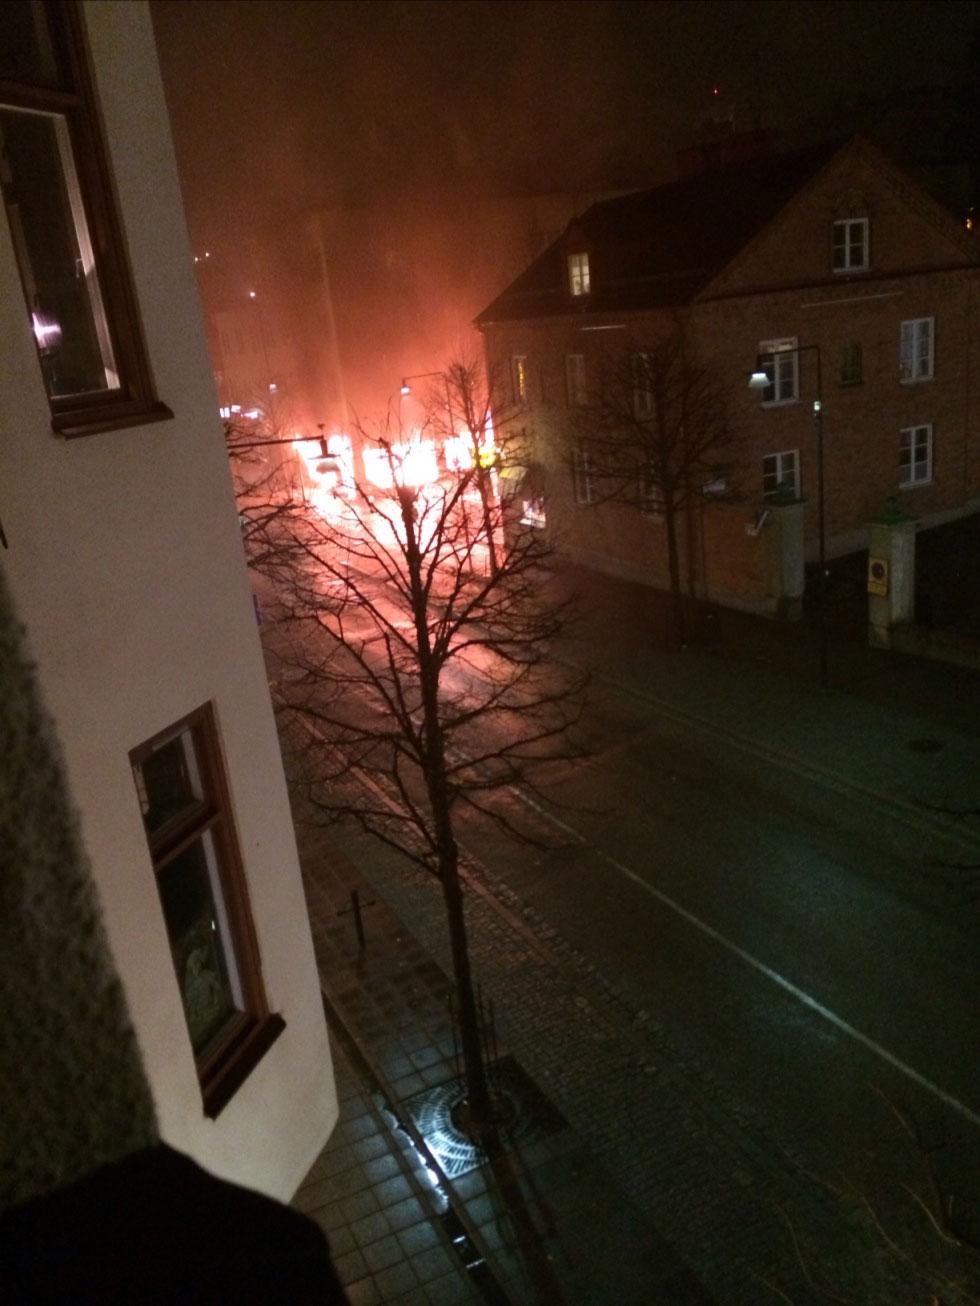 En kraftig brand utbröt i ett konditori i Sundbyberg, tidigt på fredagsmorgonen.